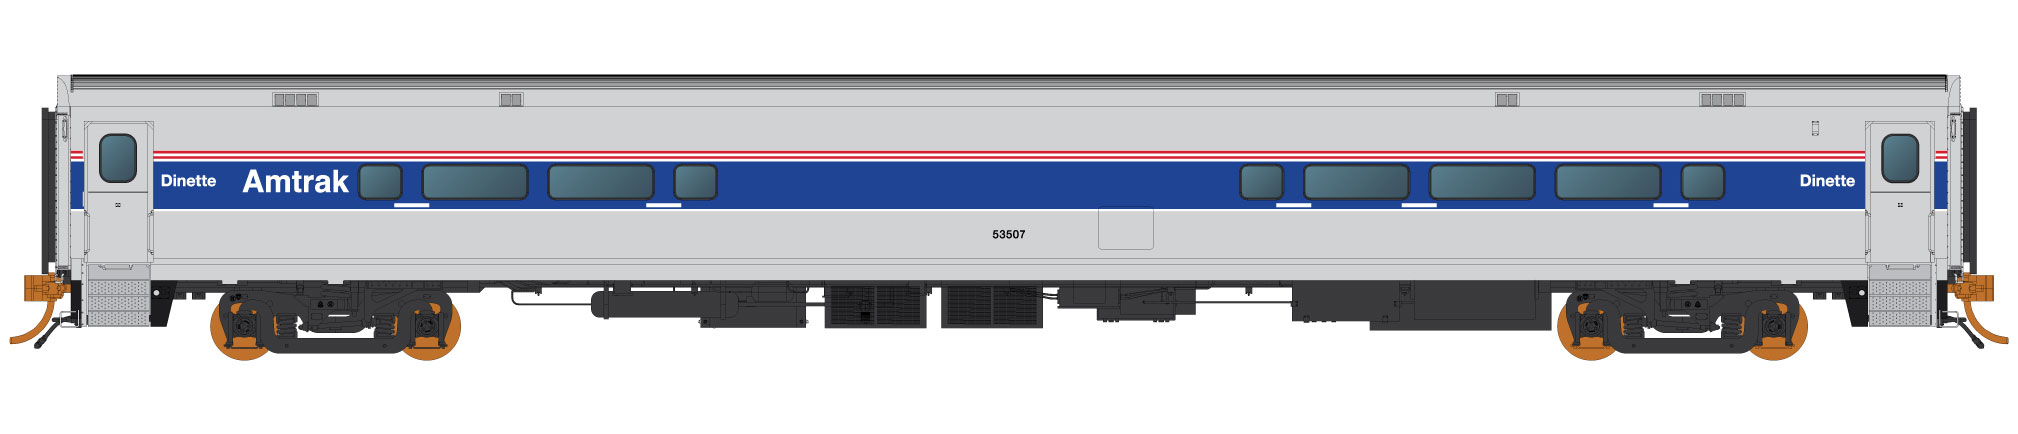 Rapido Trains 128026 Horizon Dinette PH IV, Amtrak - The Scuderia 46